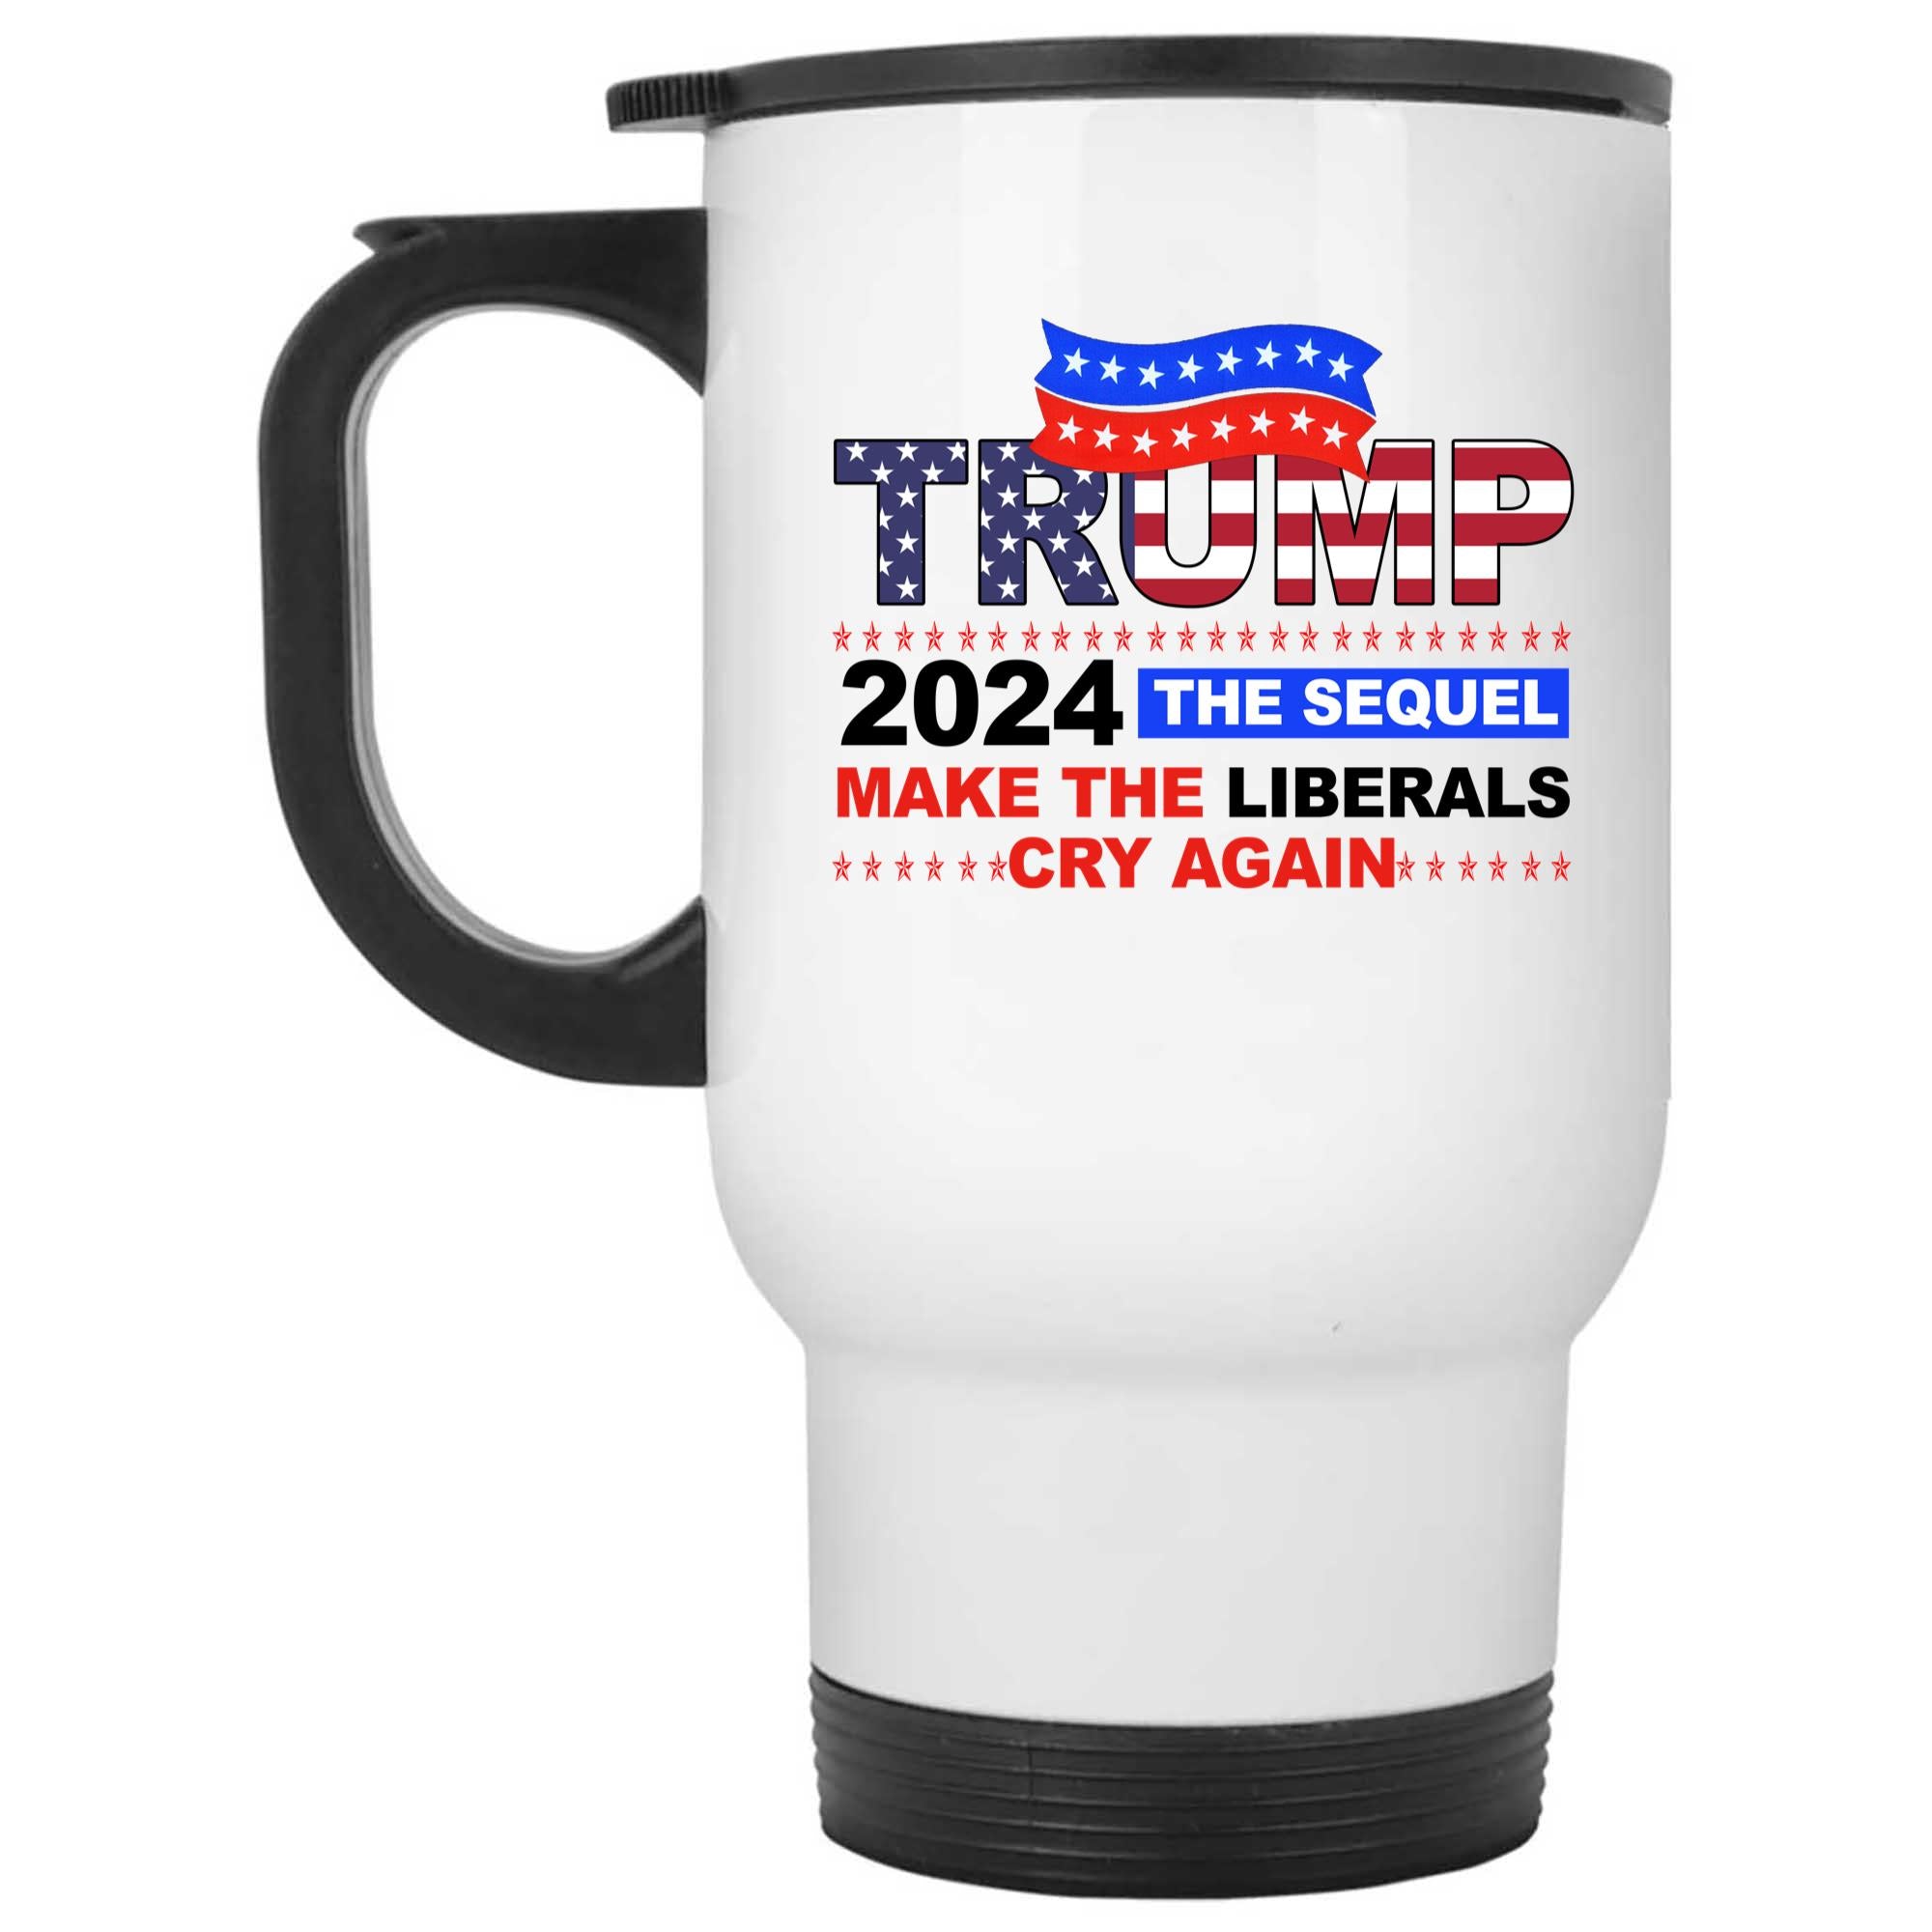 Skitongifts Coffee Mug Funny Ceramic Novelty Trump 2024 The Sequel Make The Liberals Cry Again TLH6aUM